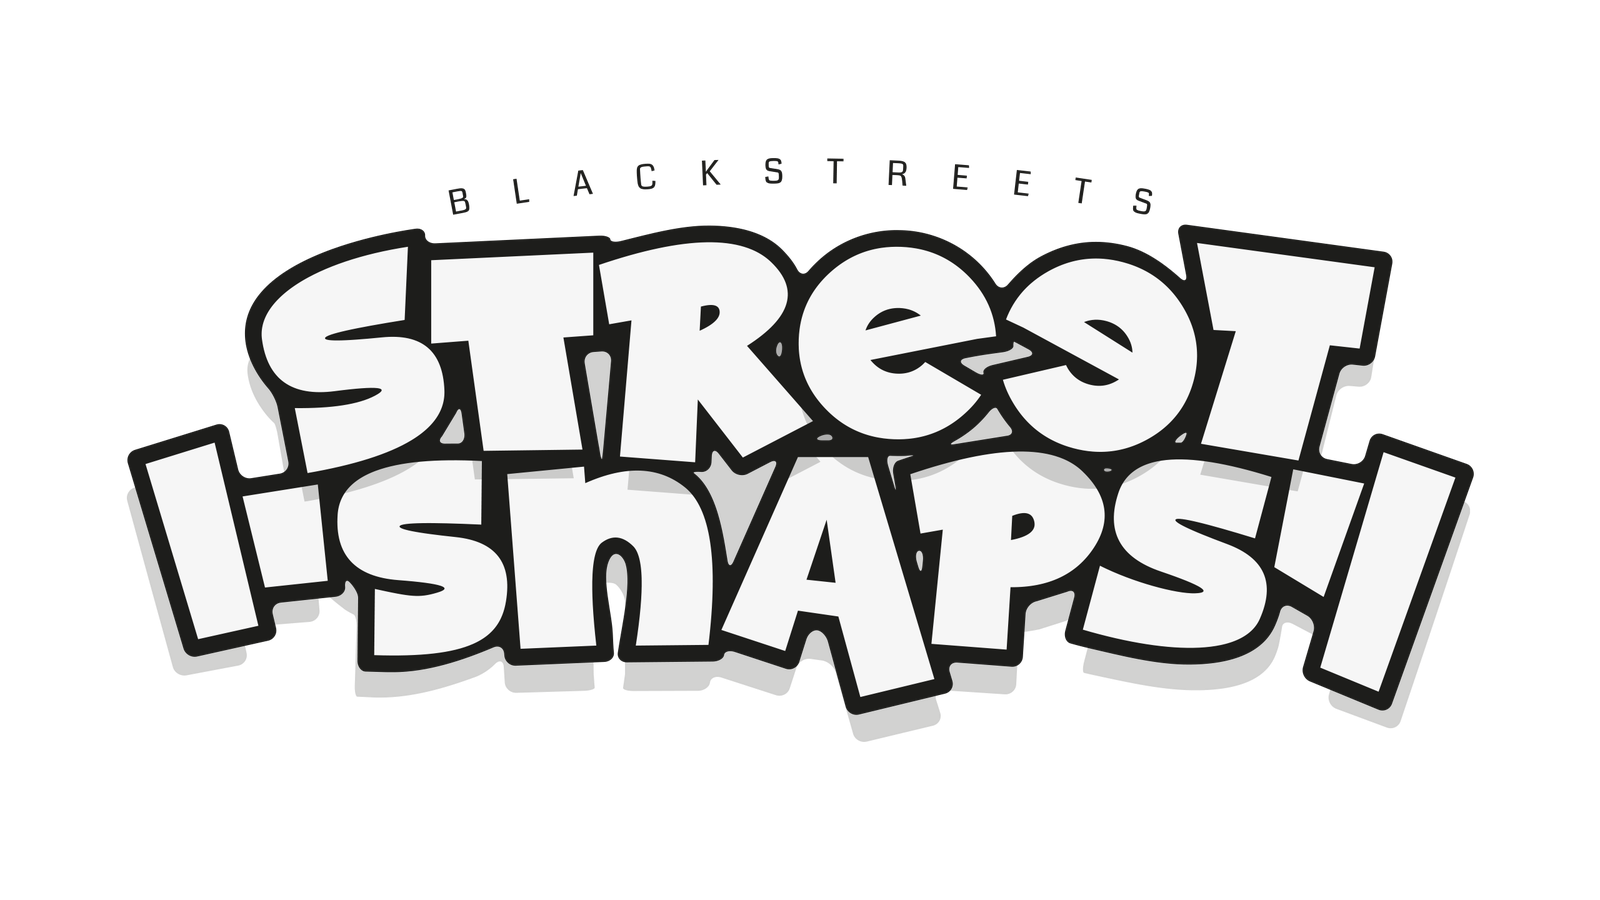 BLACKSTREETS STREET SNAPS #1